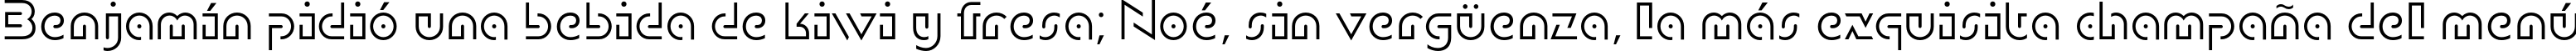 Пример написания шрифтом DublonLight текста на испанском